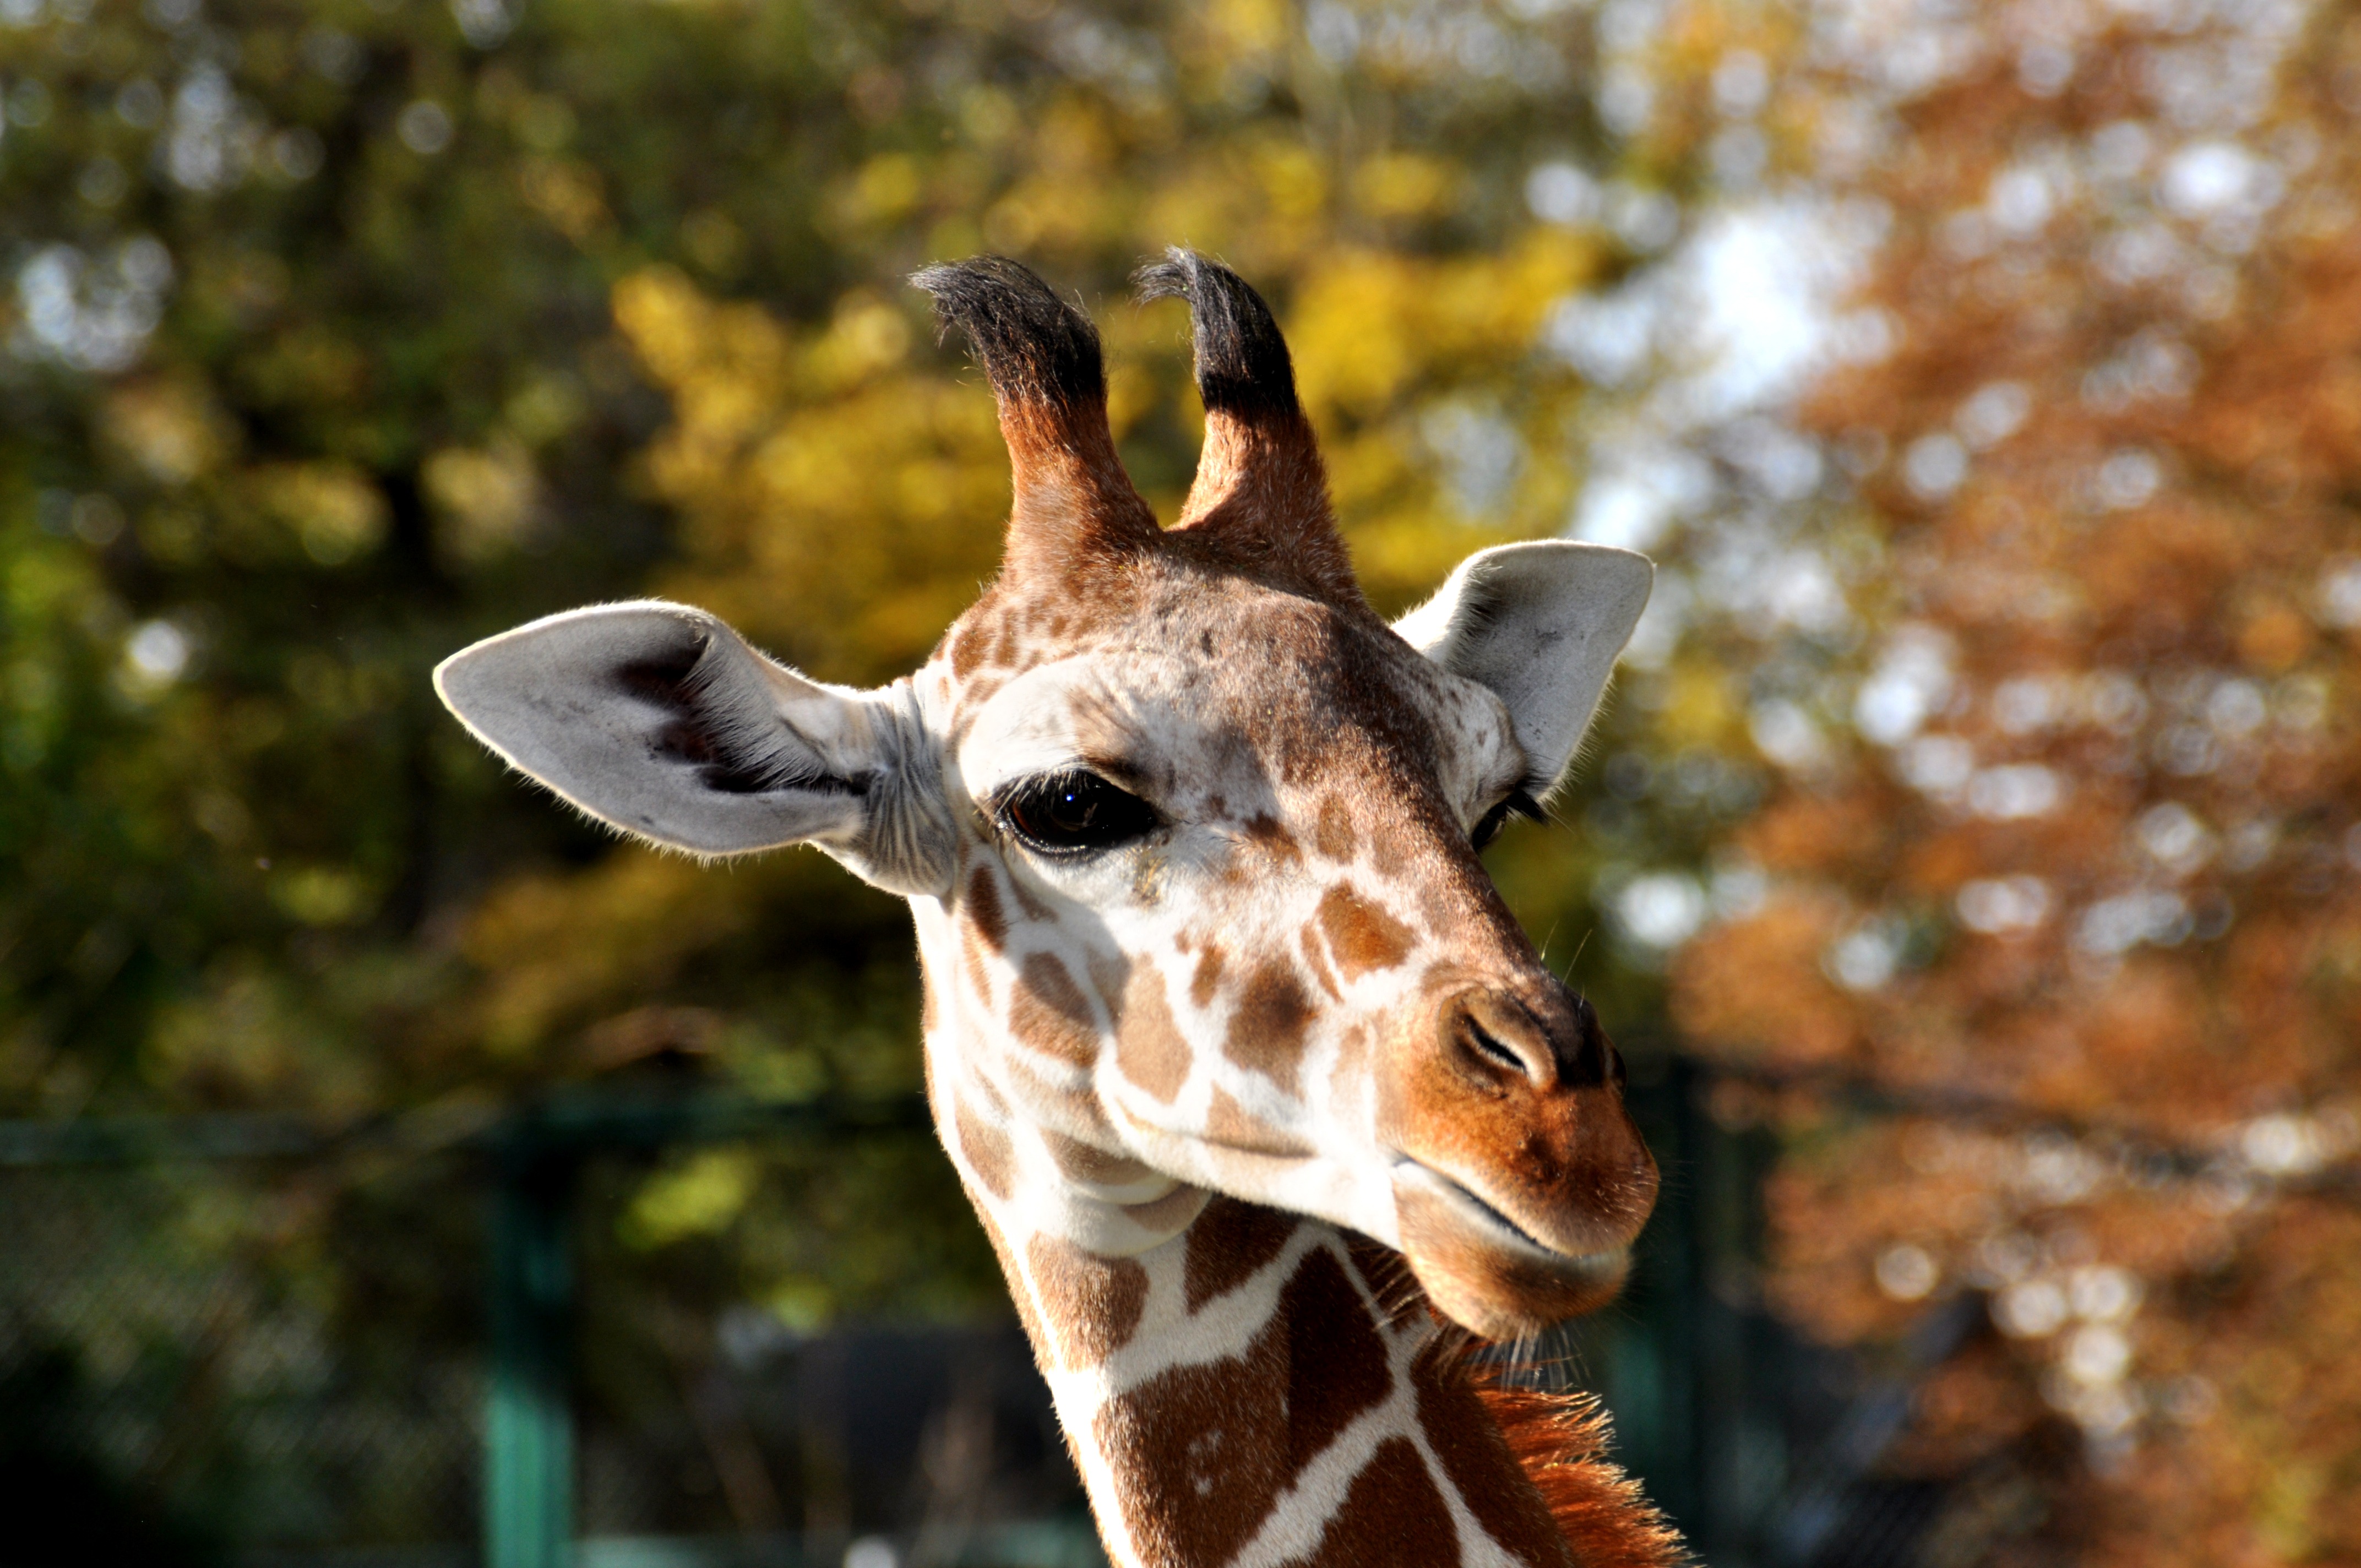 Giraffe close-up on blurred background free image